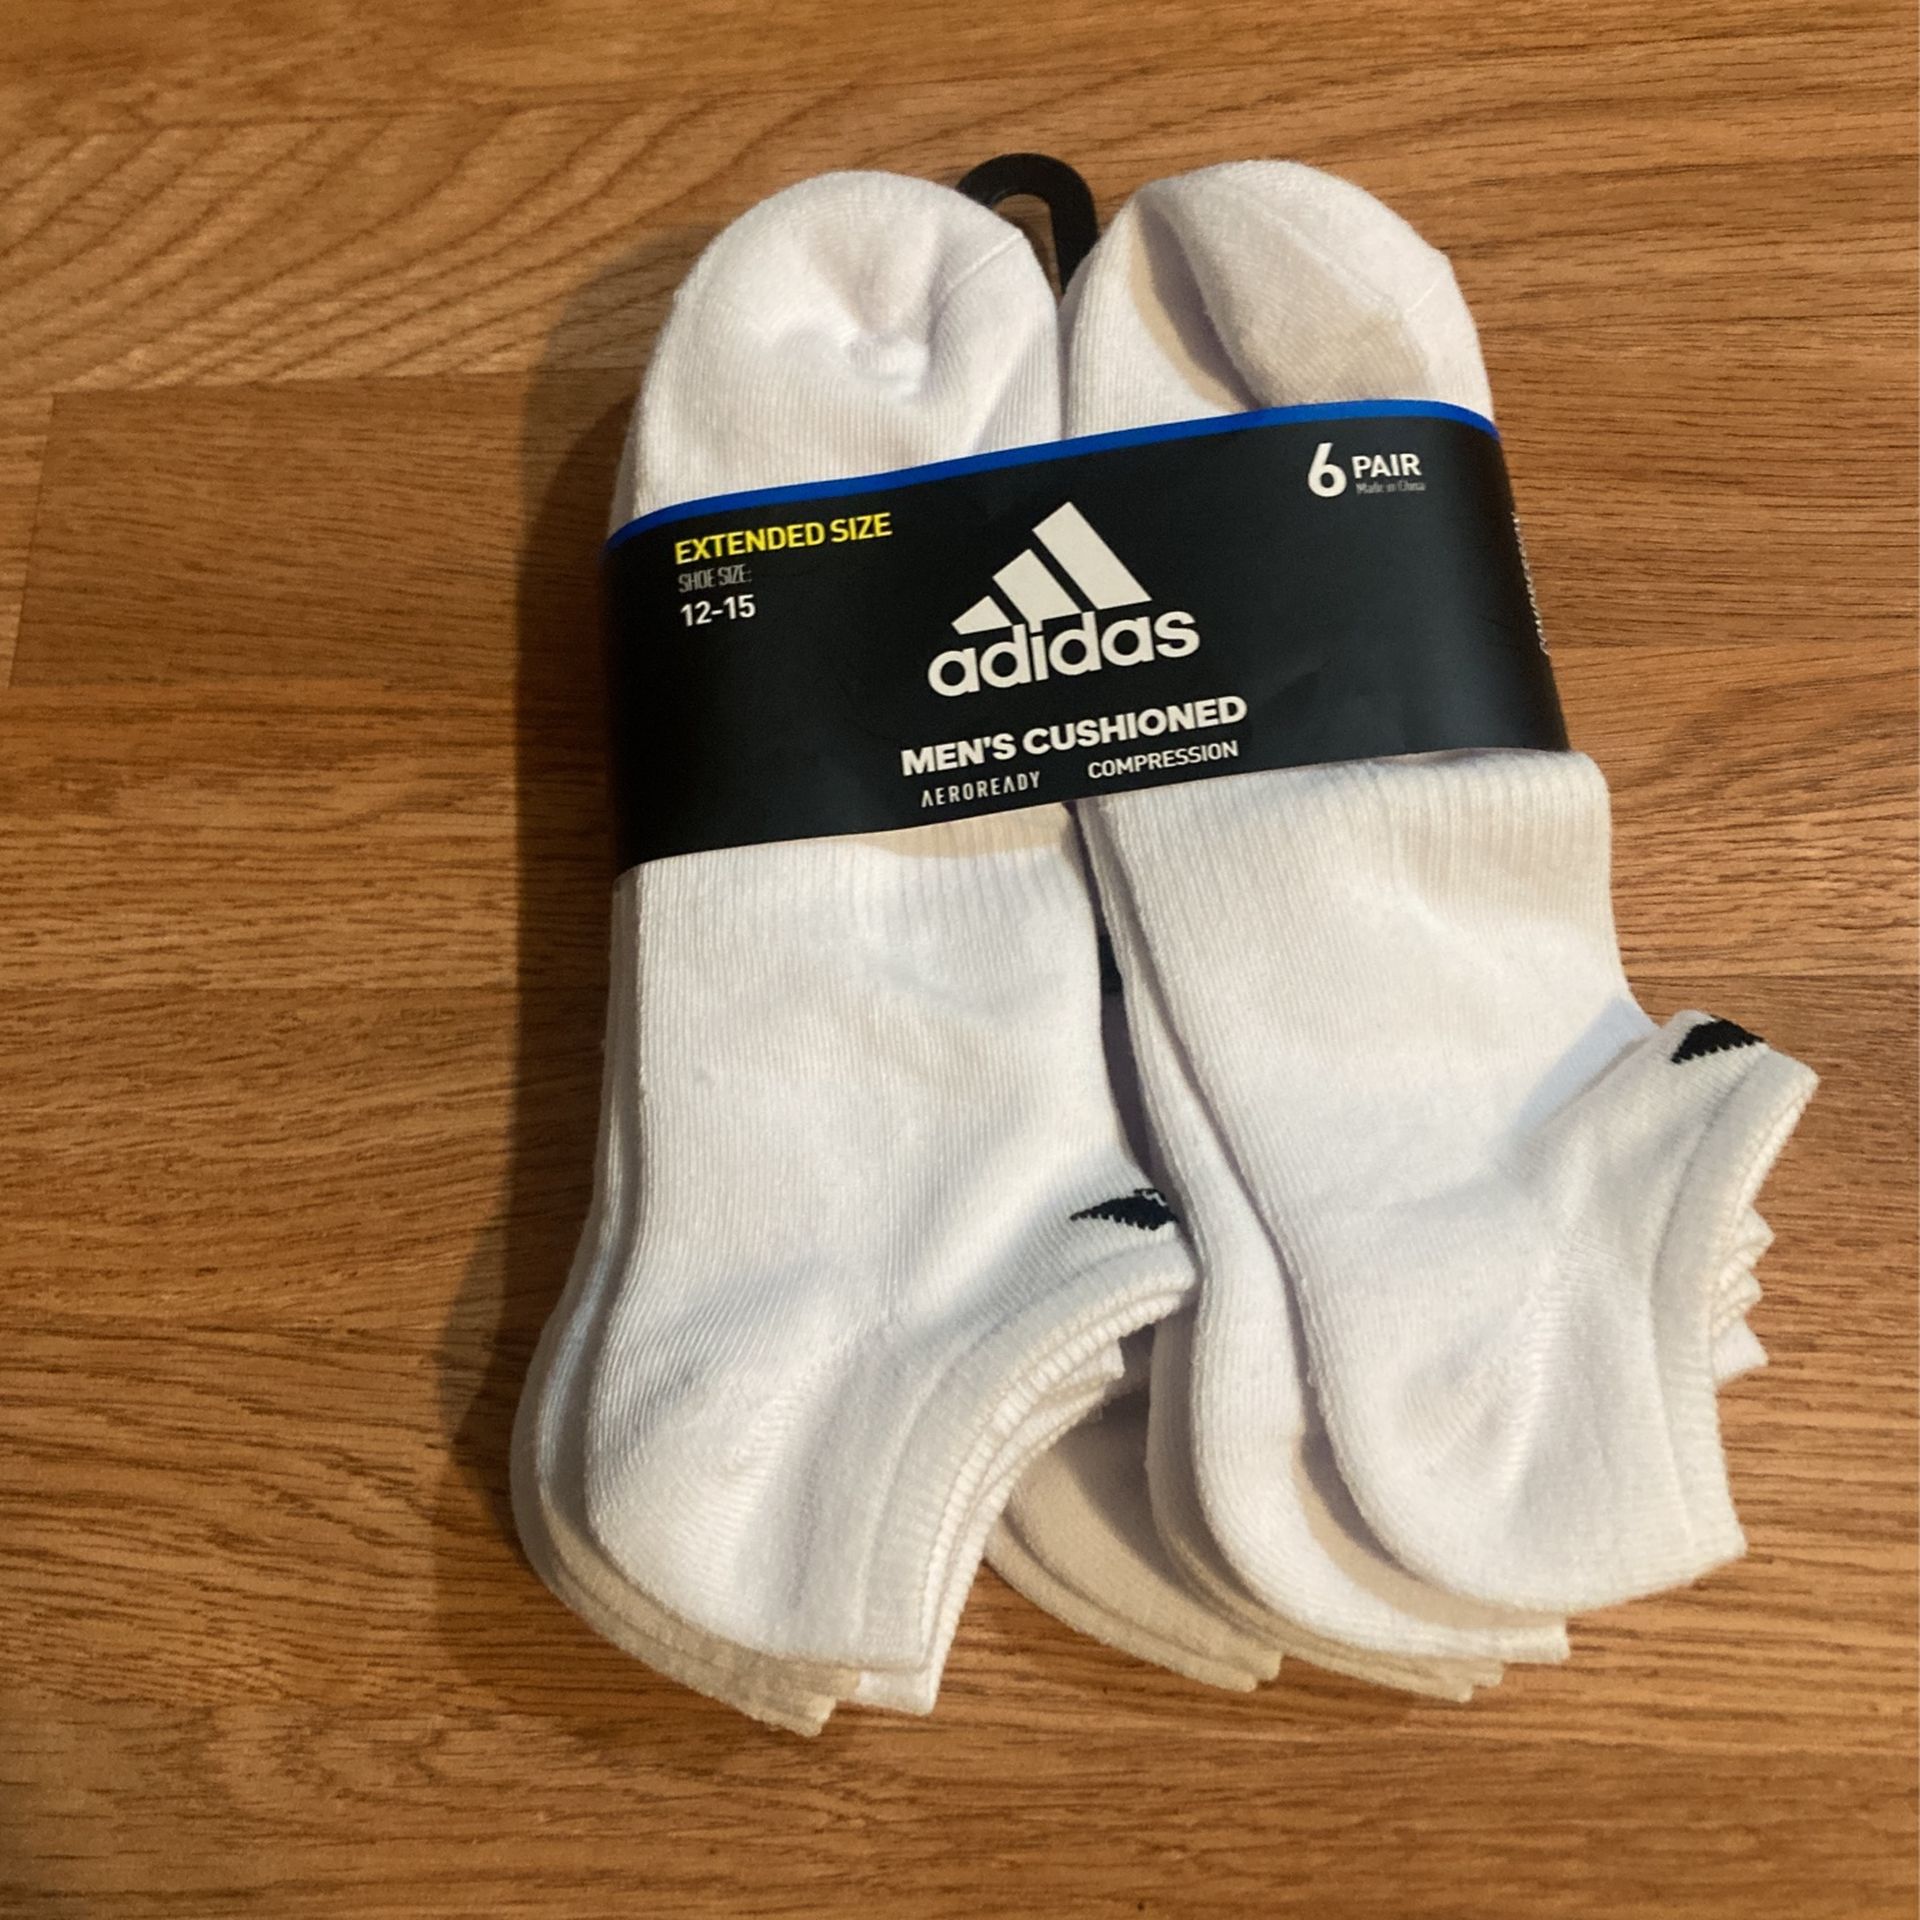 Adidas Men’s Compression Socks